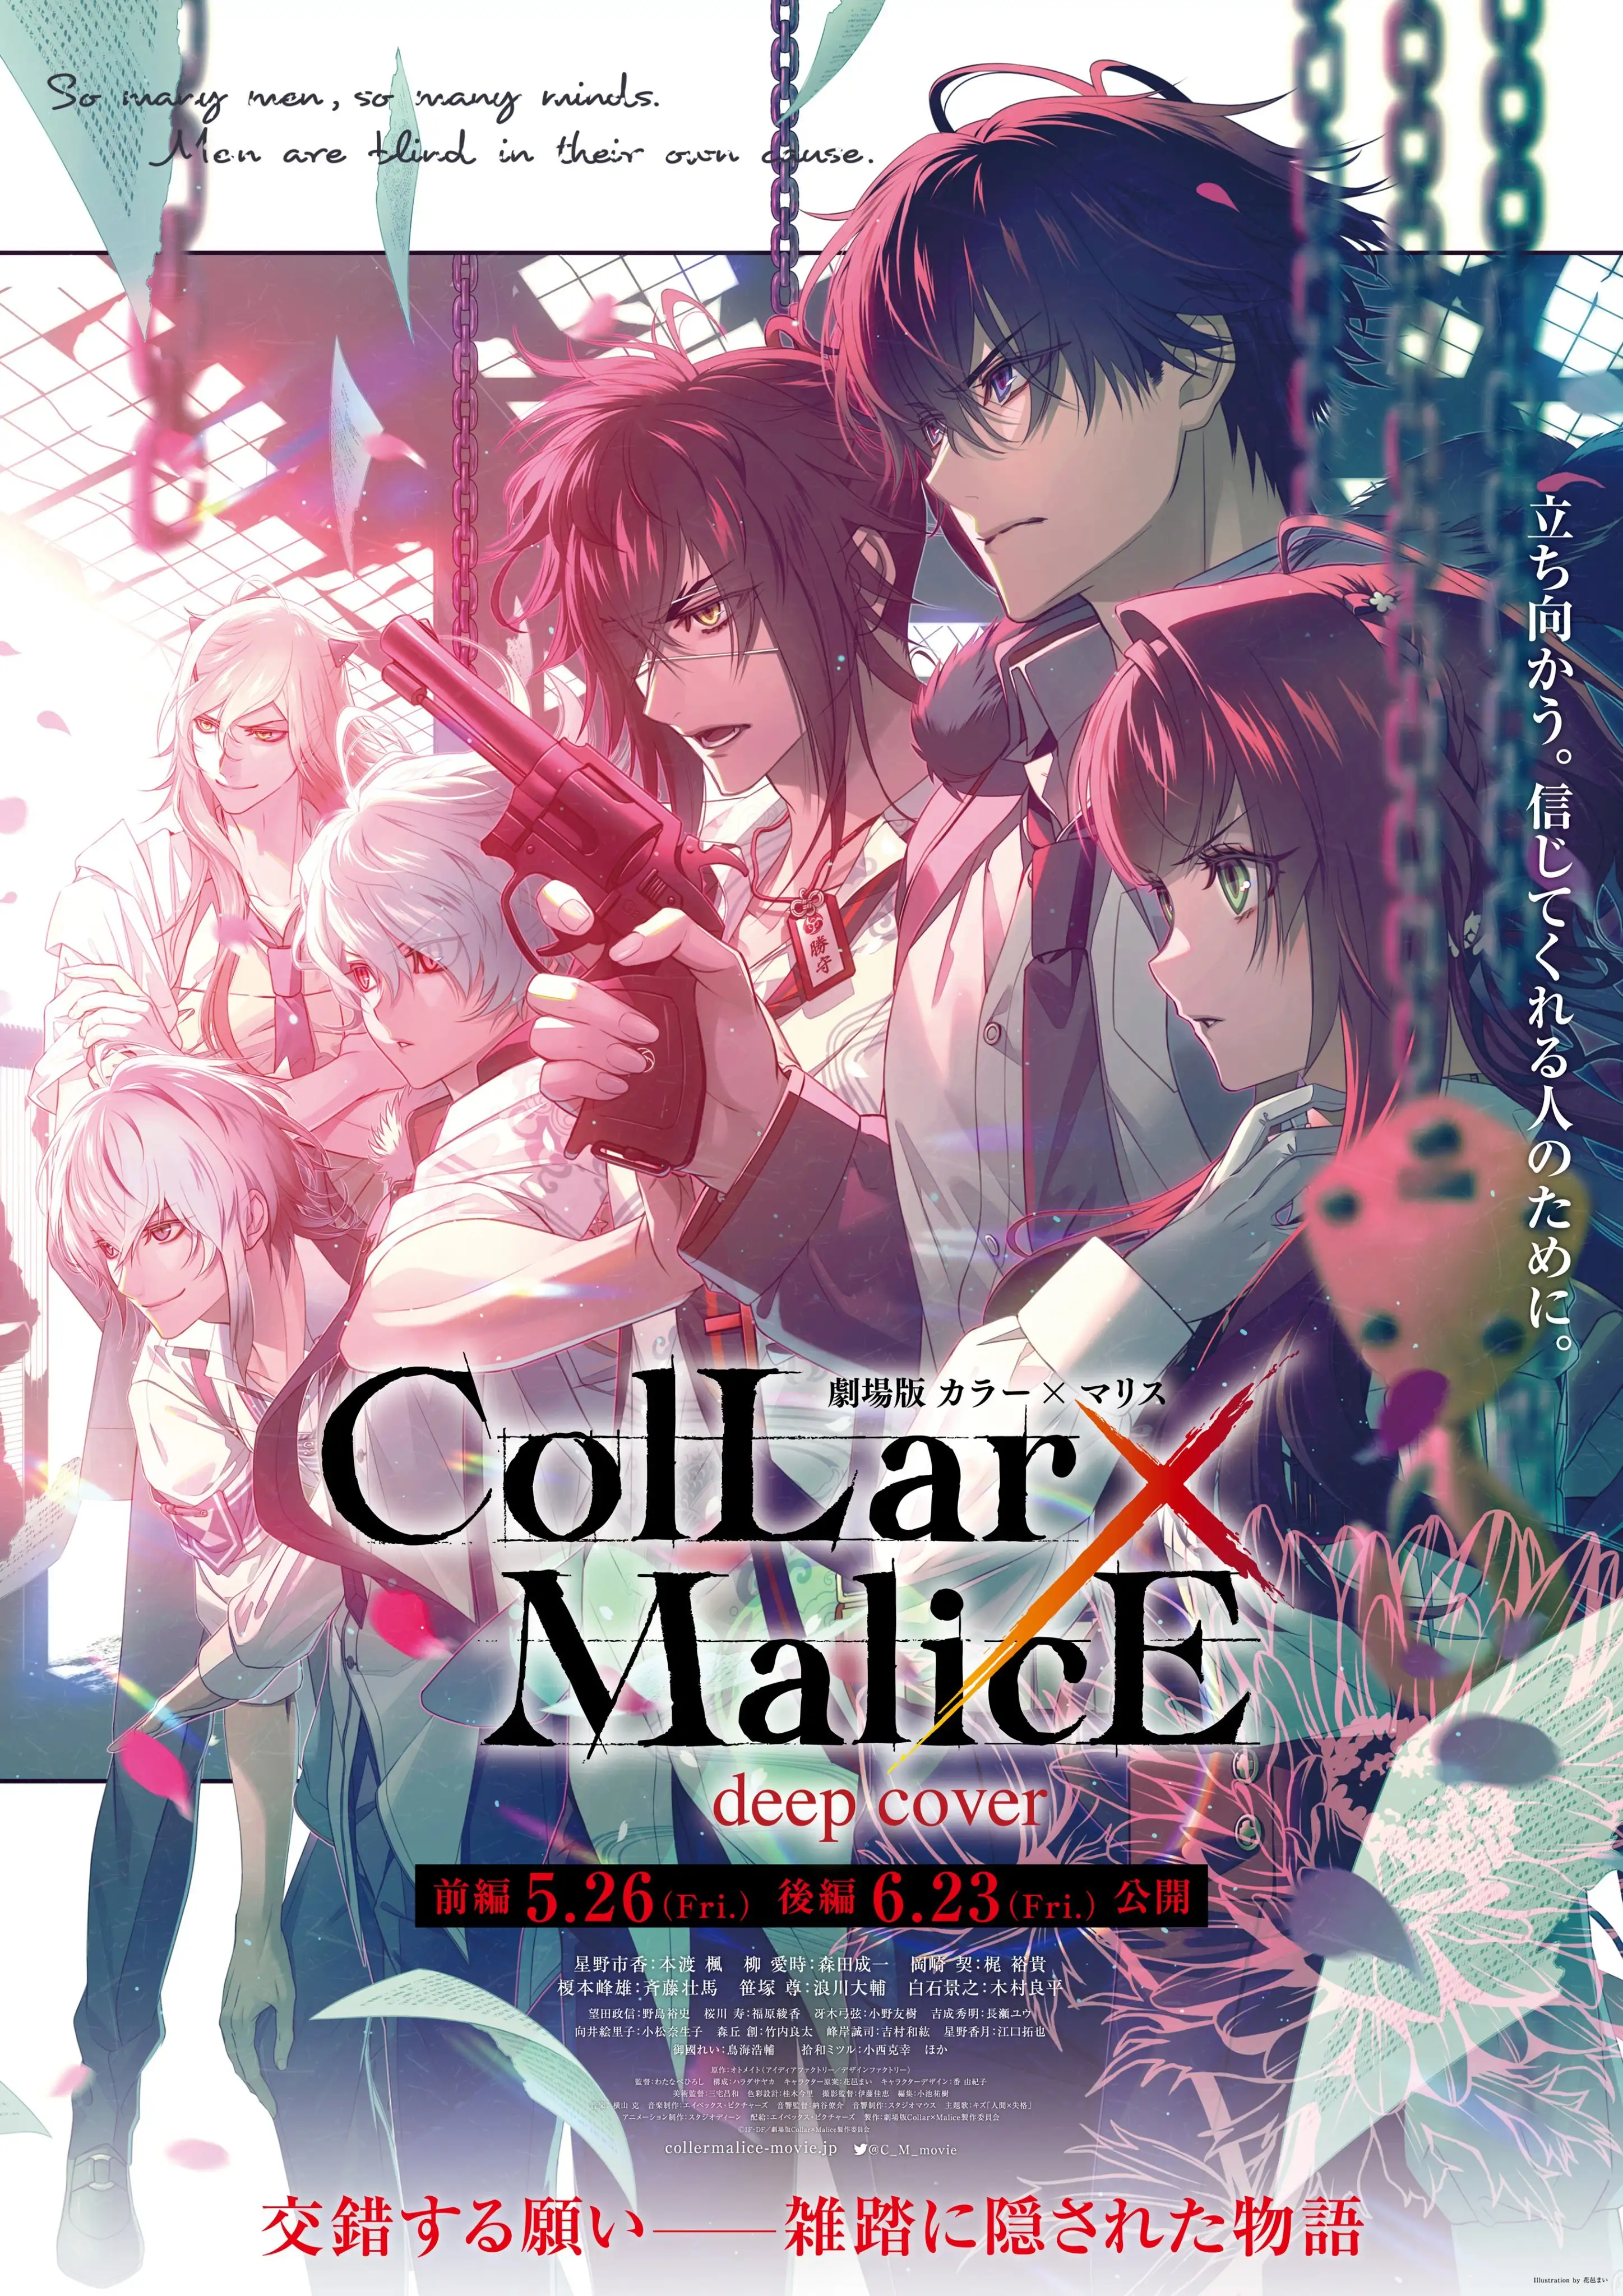 CollarxMalice -deep cover-